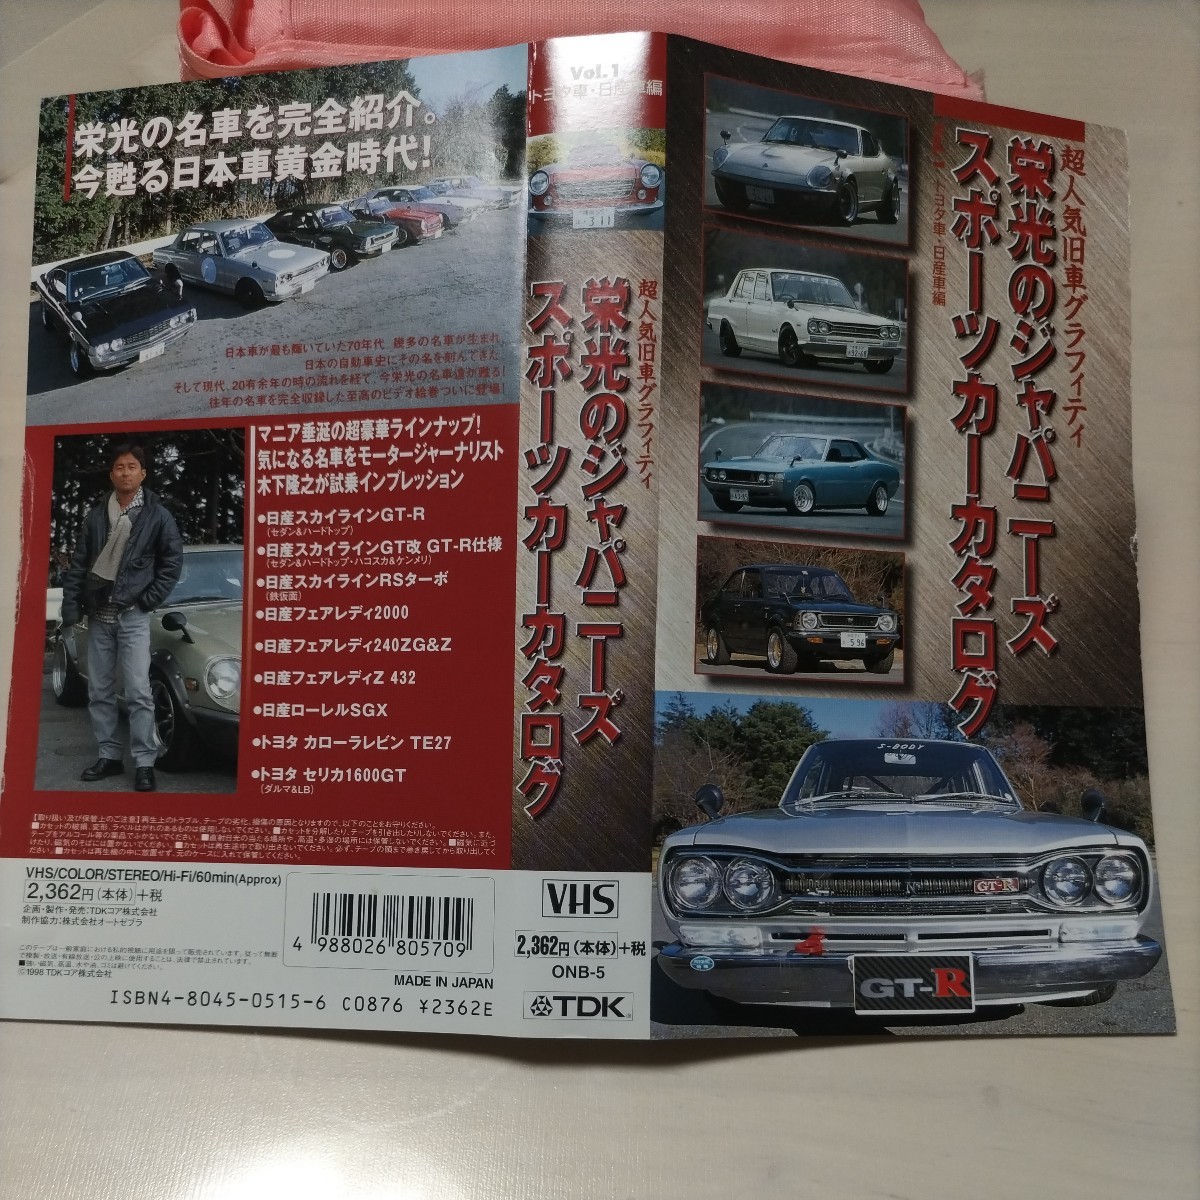  Hakosuka 240ZG. свет. japa потребности спорт машина каталог VHS